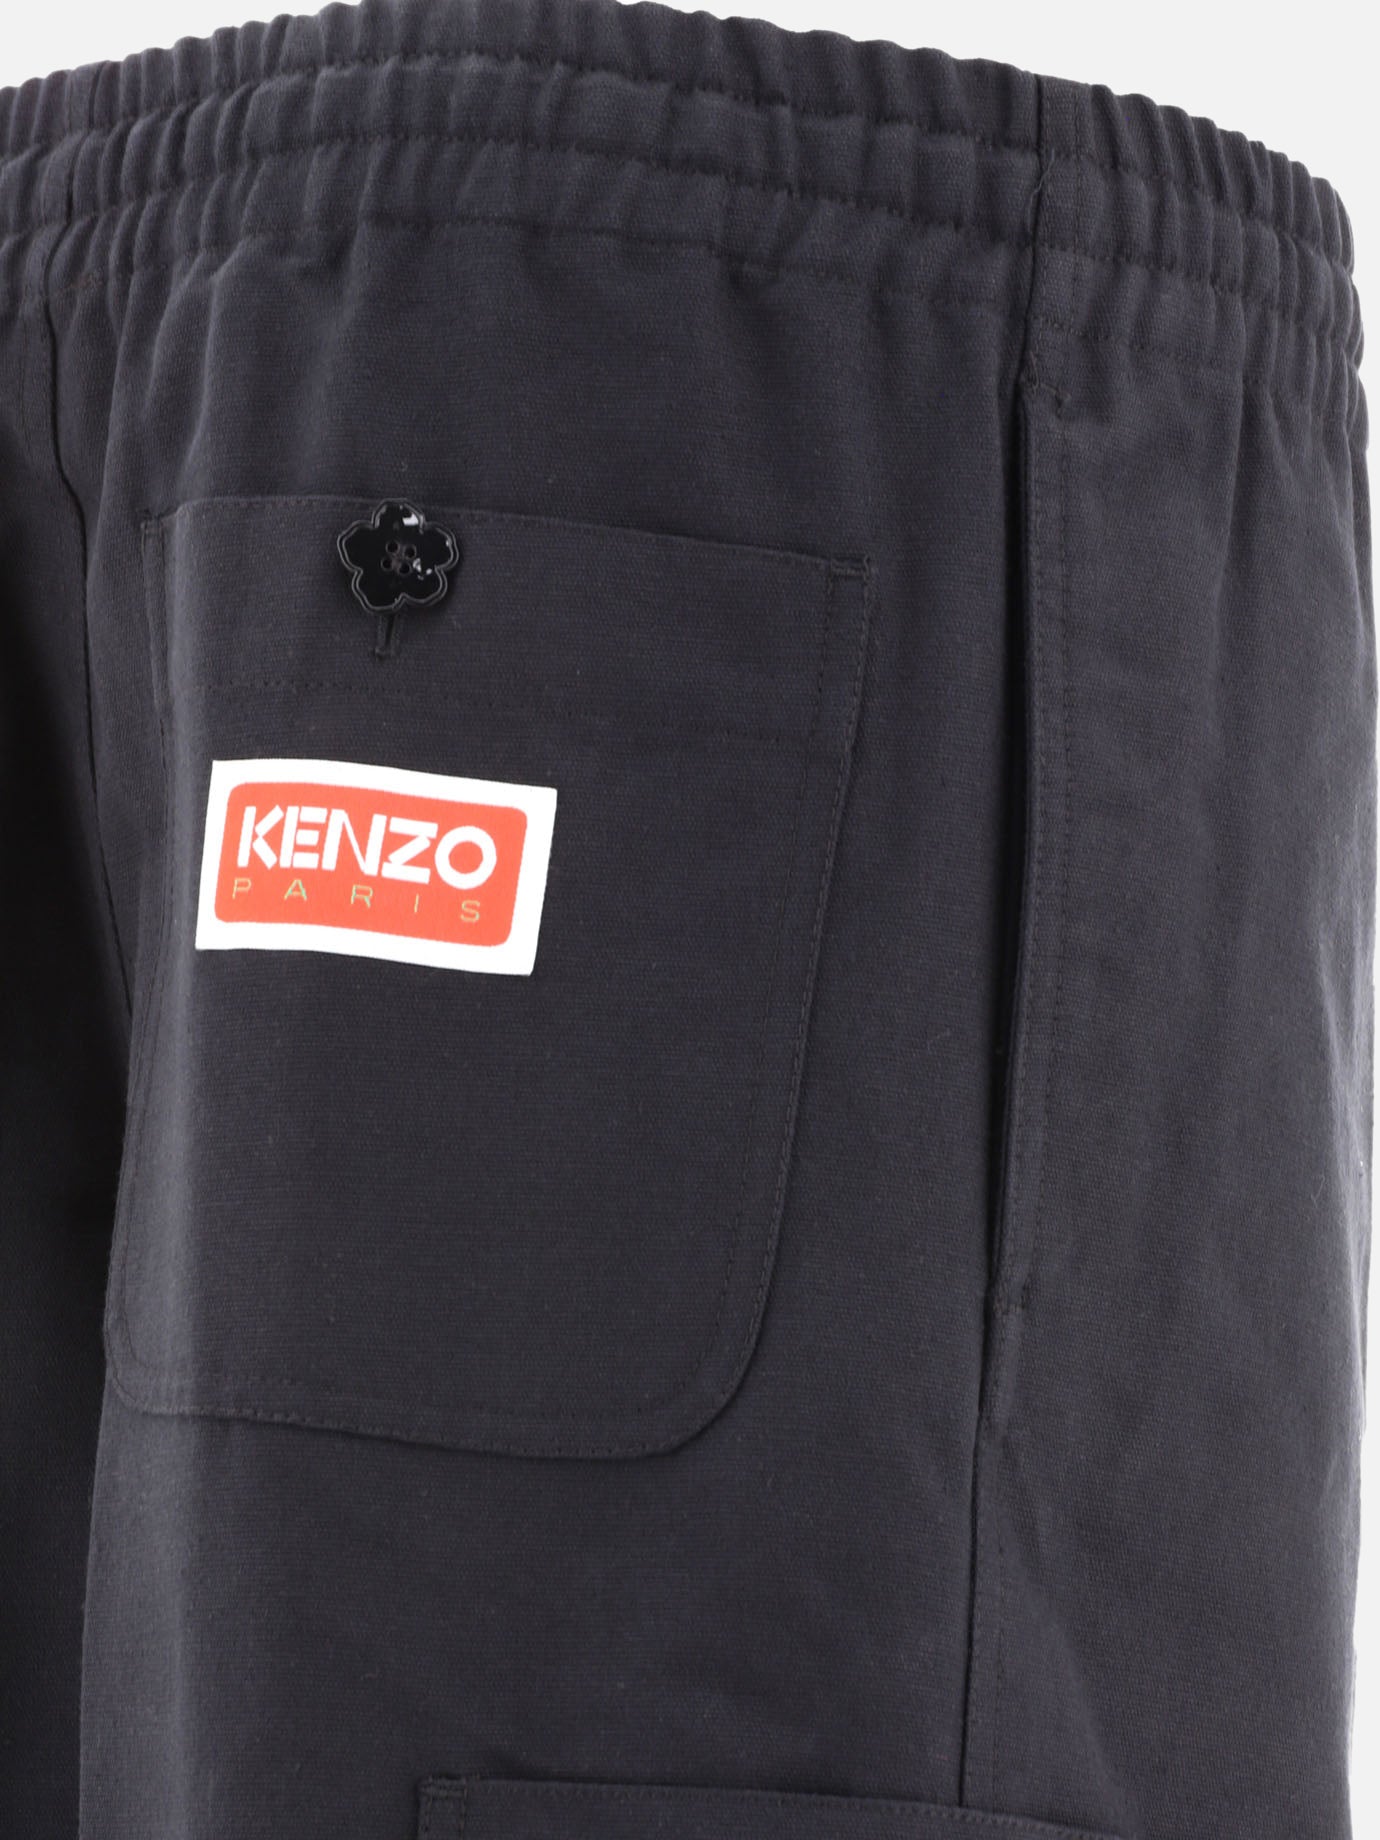 "Kenzo Paris" cargo trousers